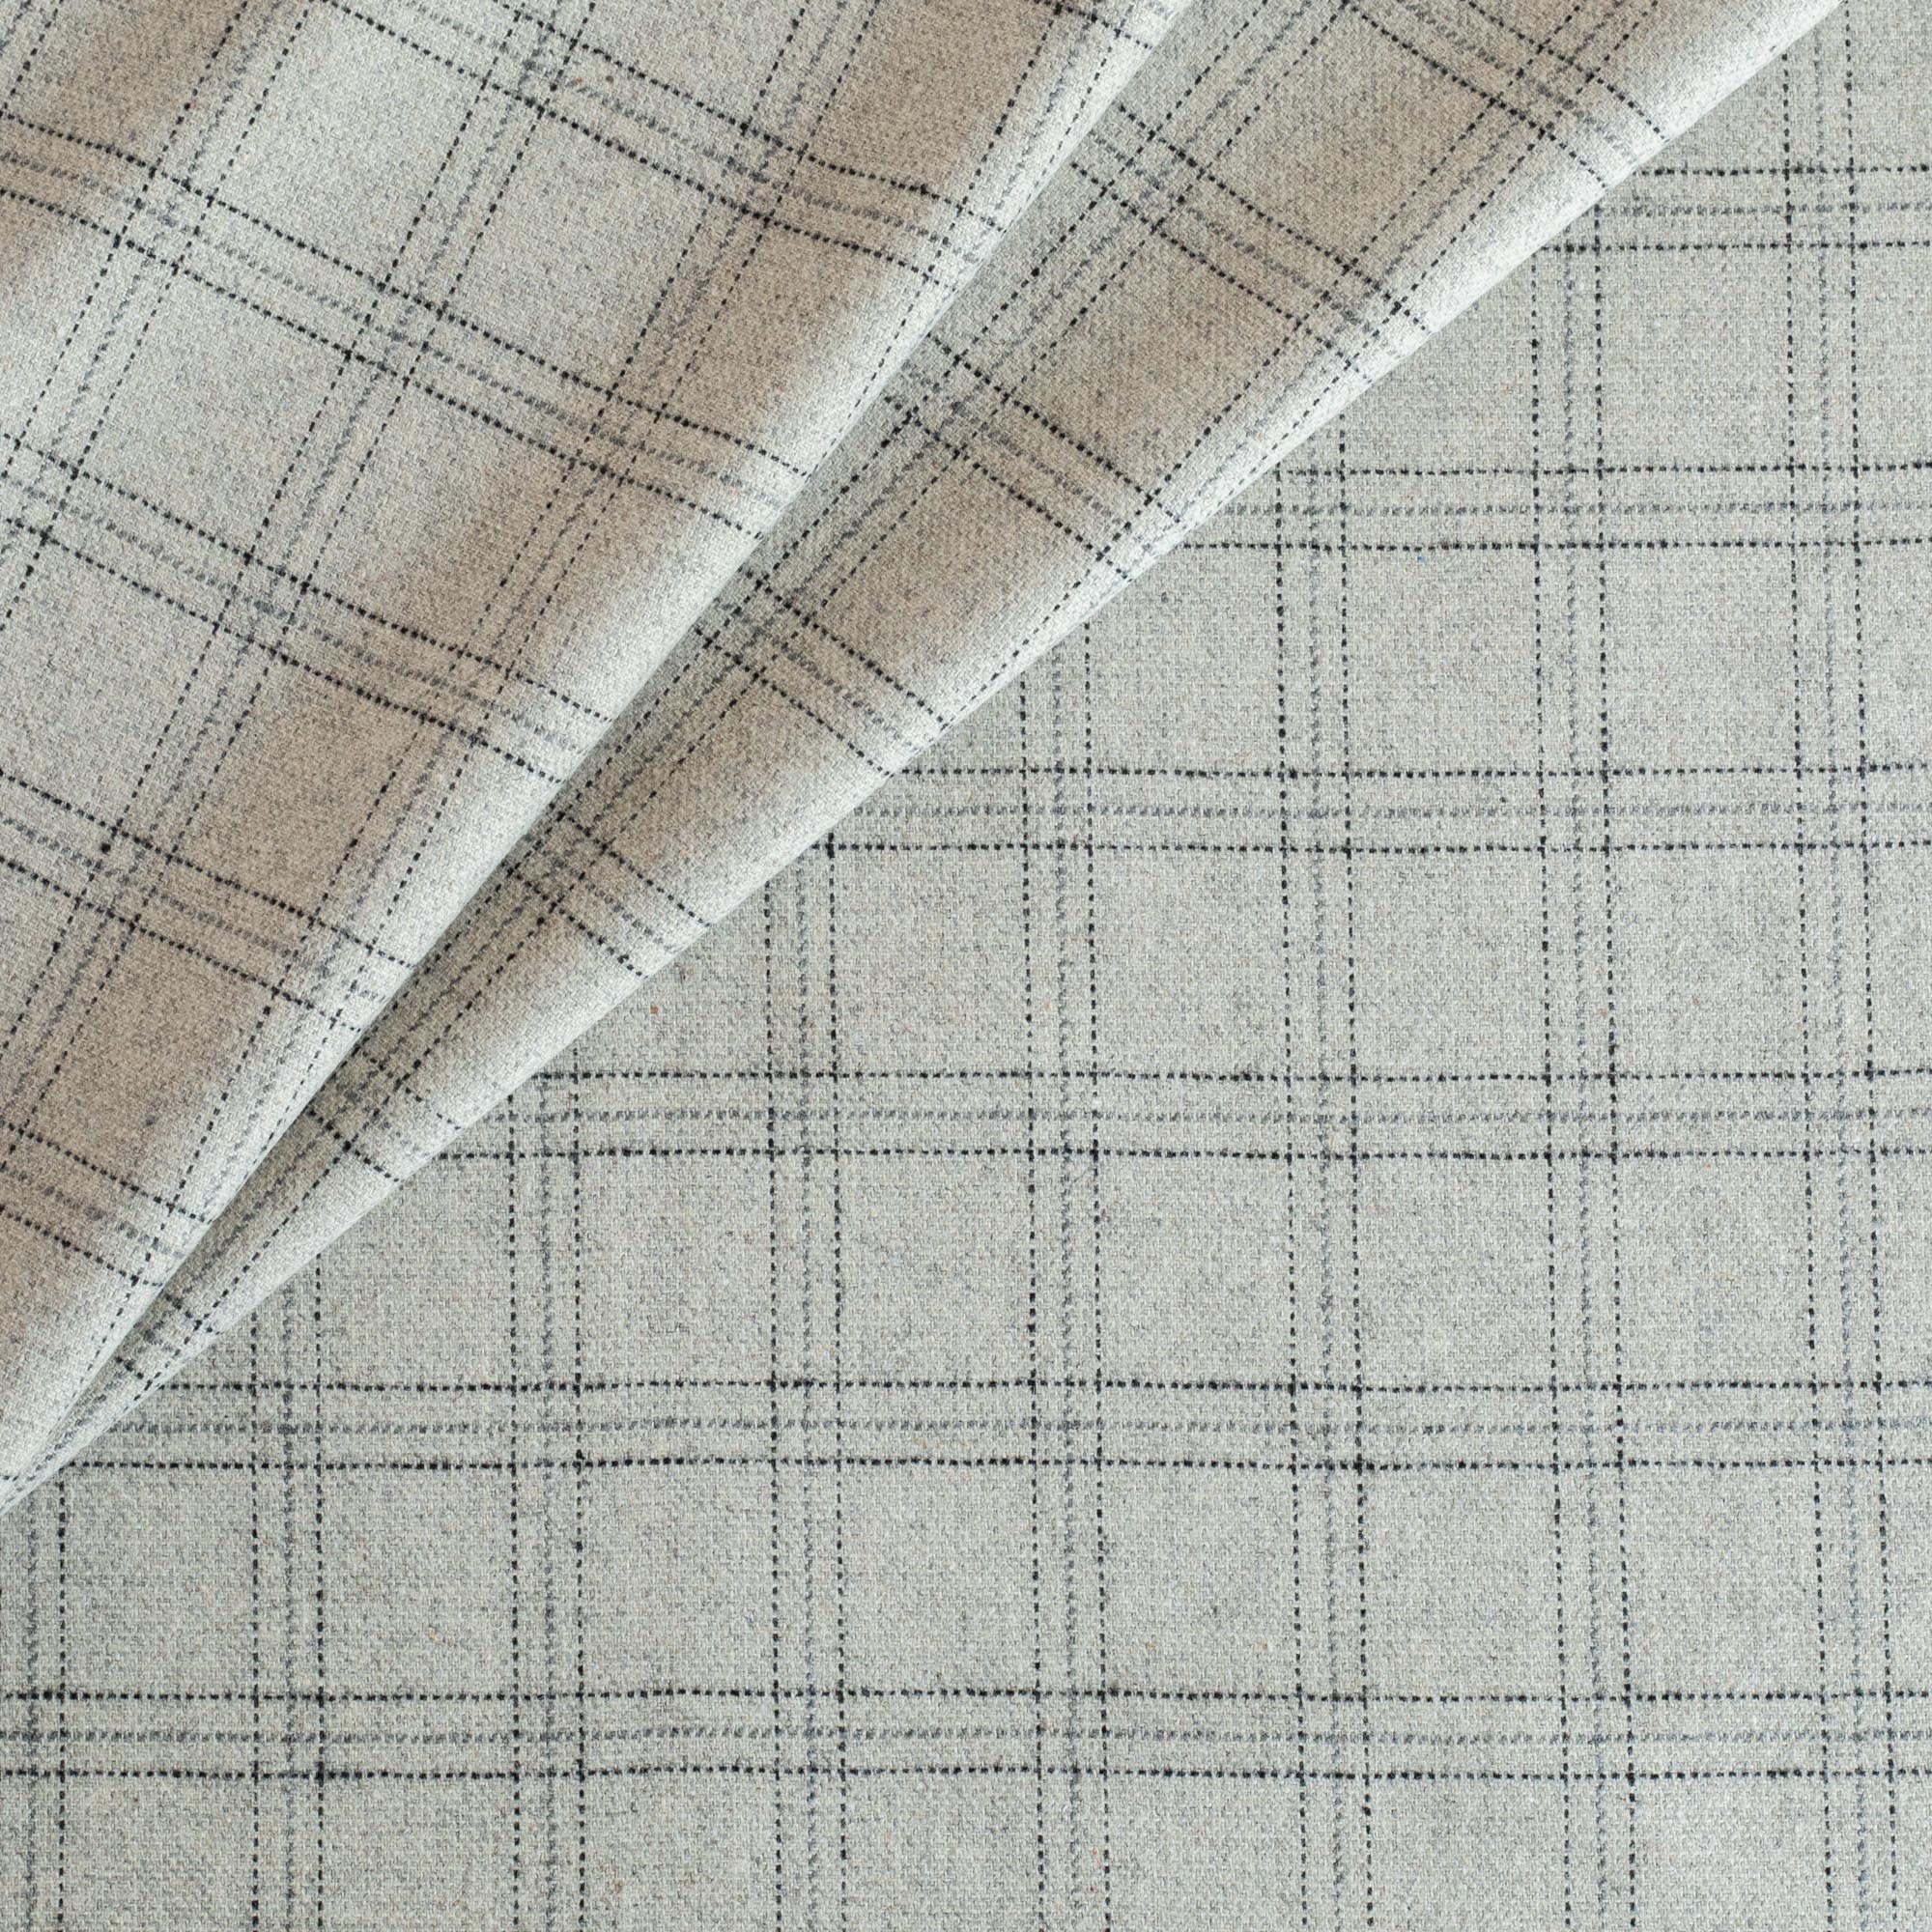 Dorset light gray plaid home decor fabric from tonic living